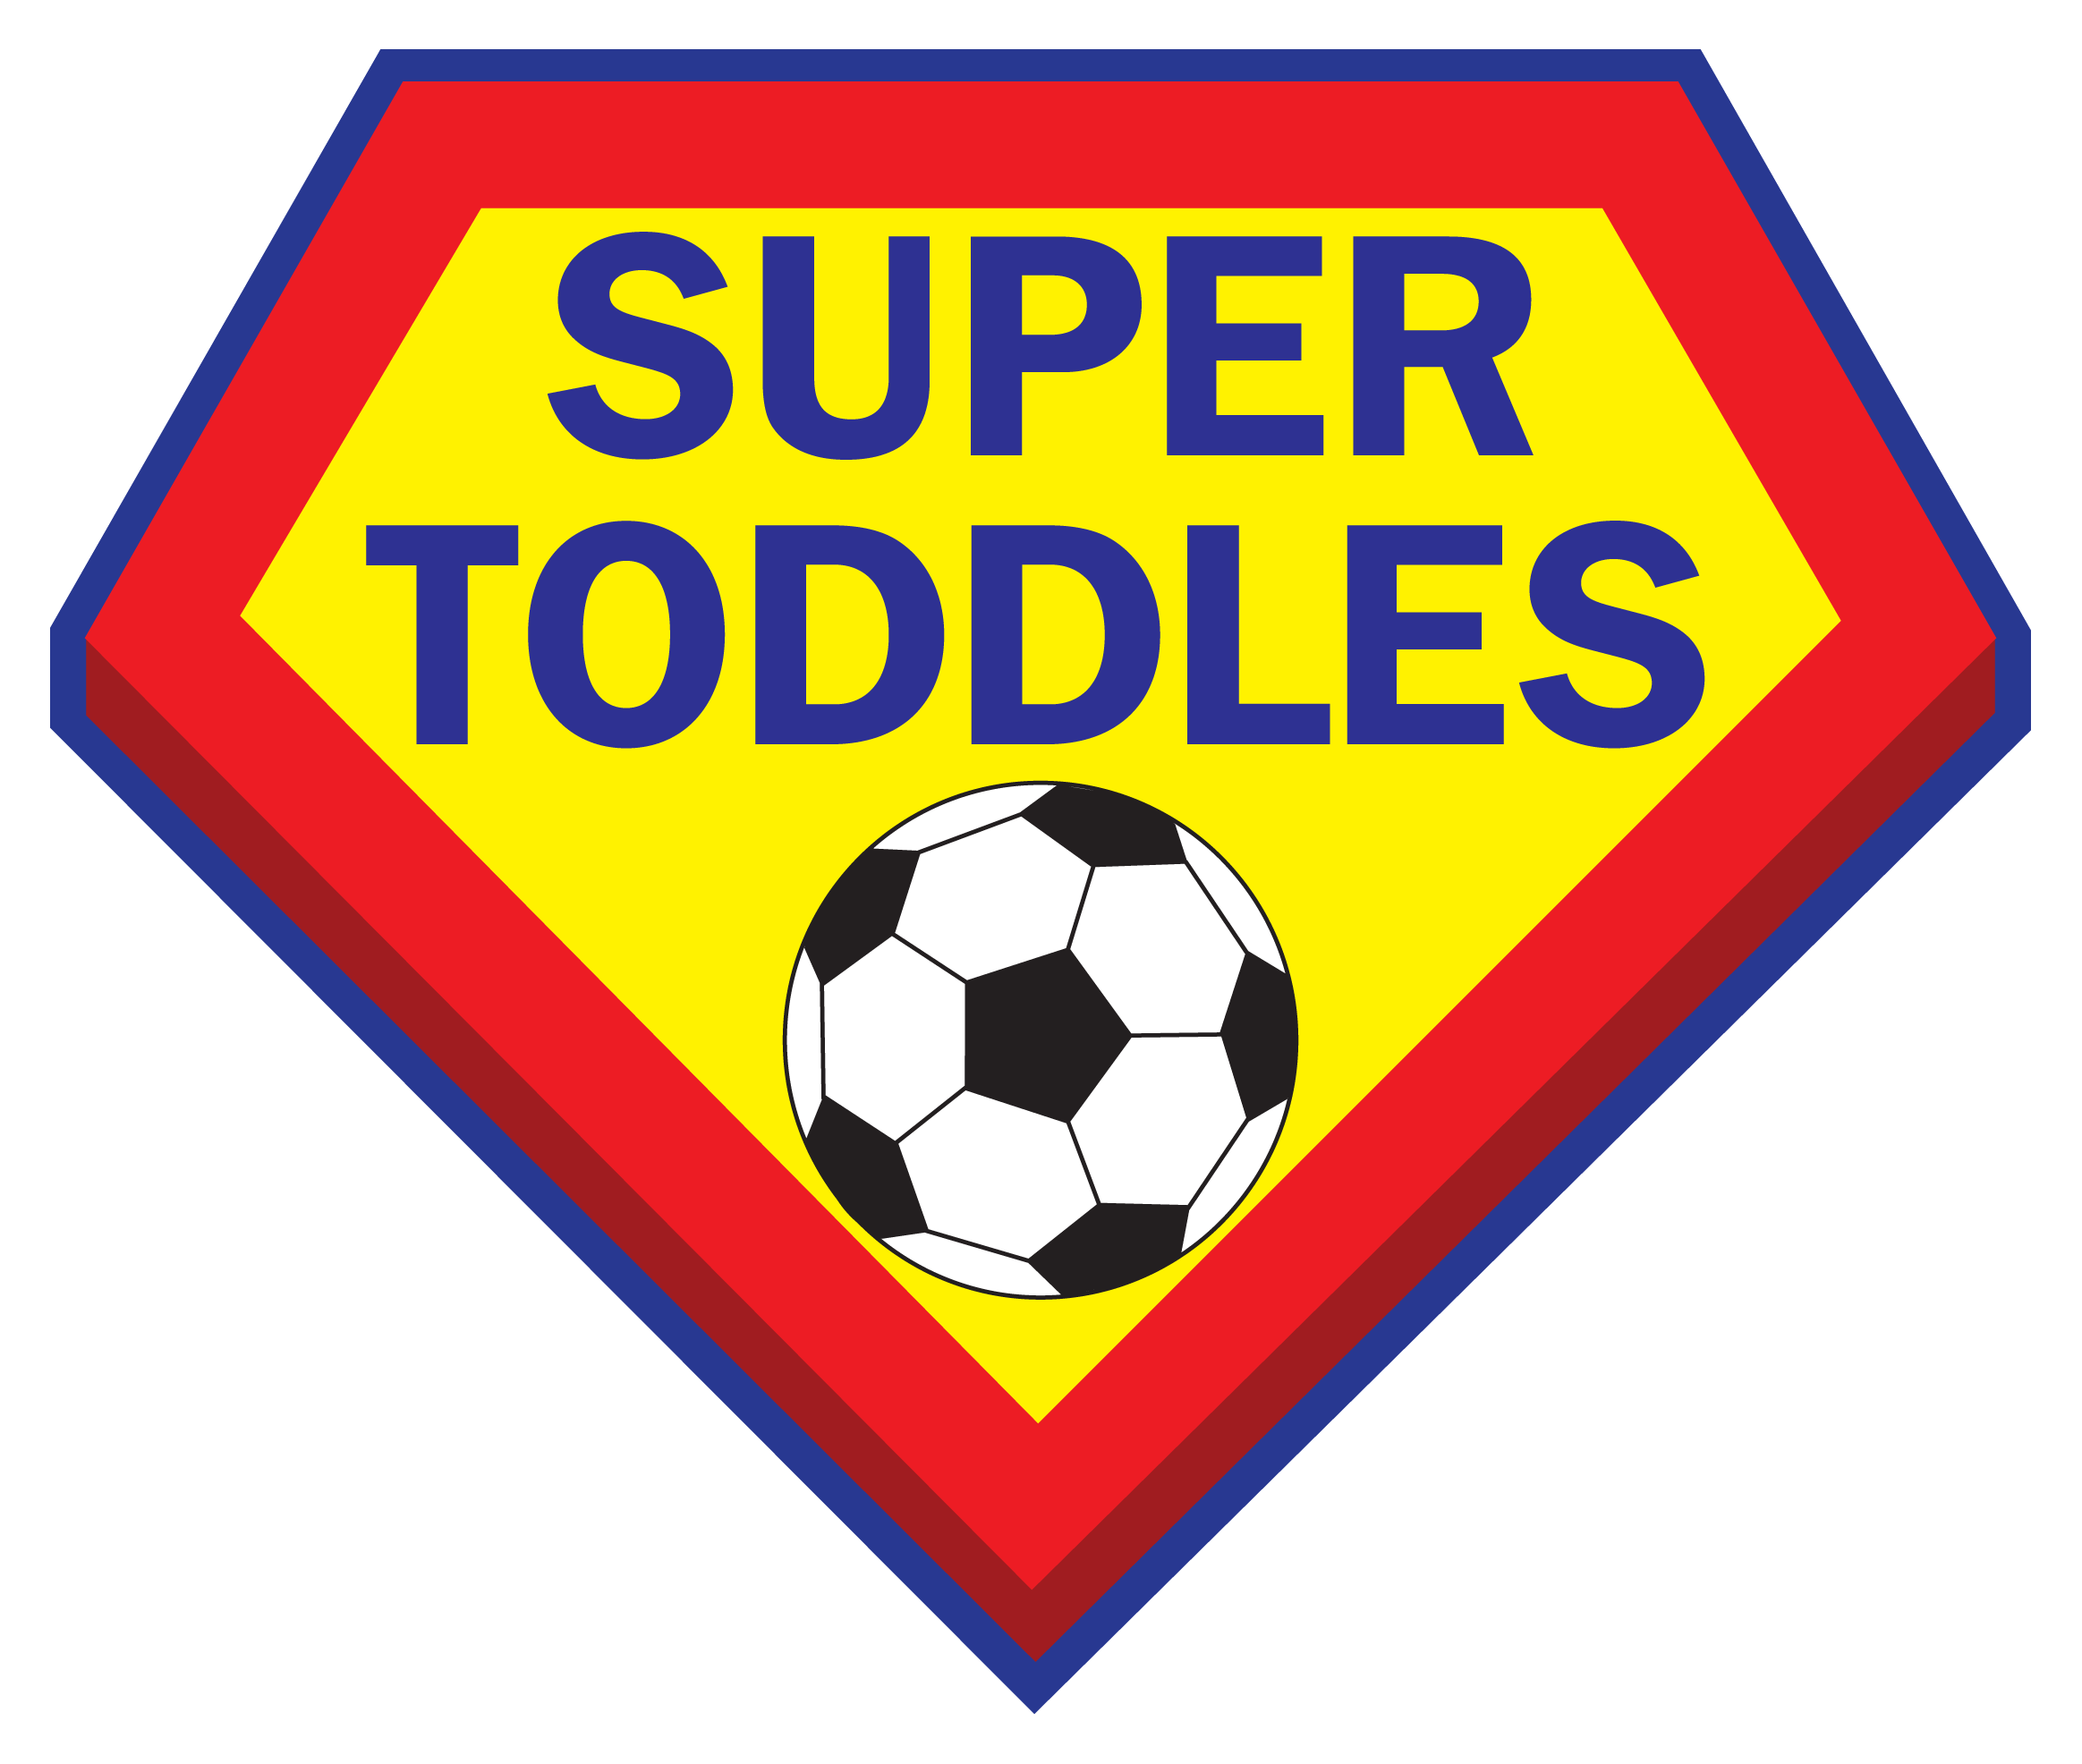 Super Toddles's logo